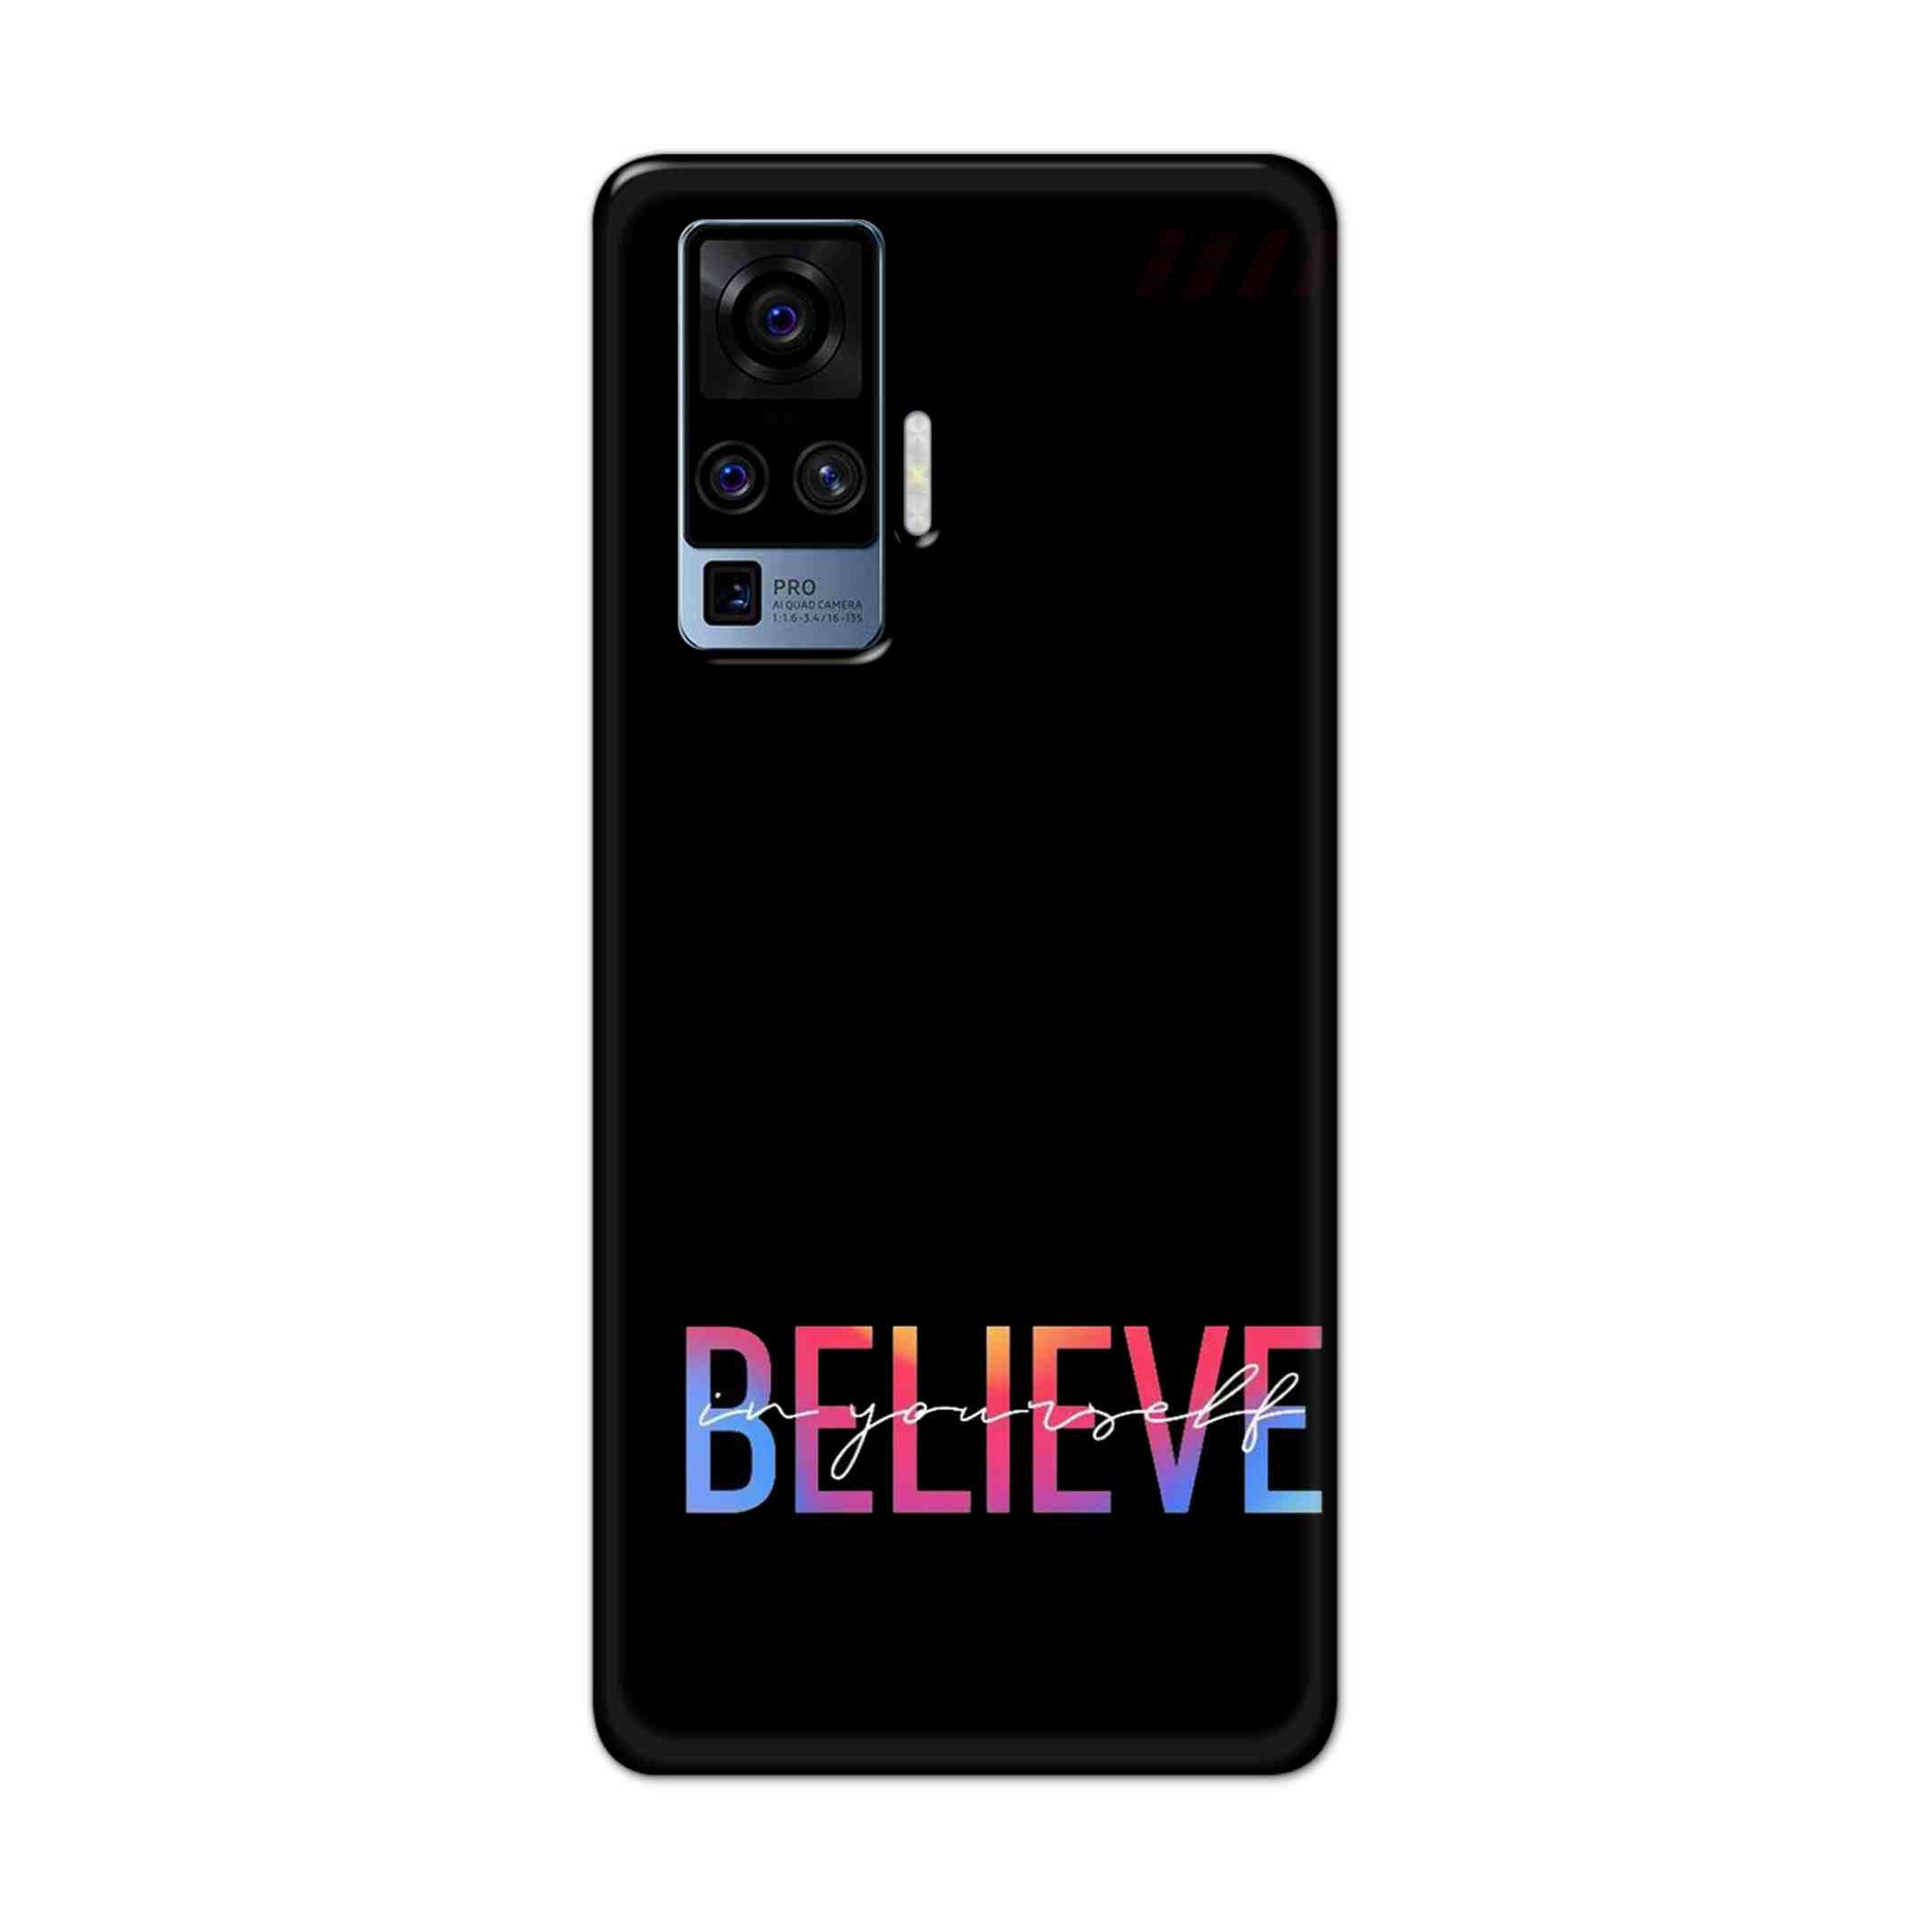 Buy Believe Hard Back Mobile Phone Case/Cover For Vivo X50 Pro Online